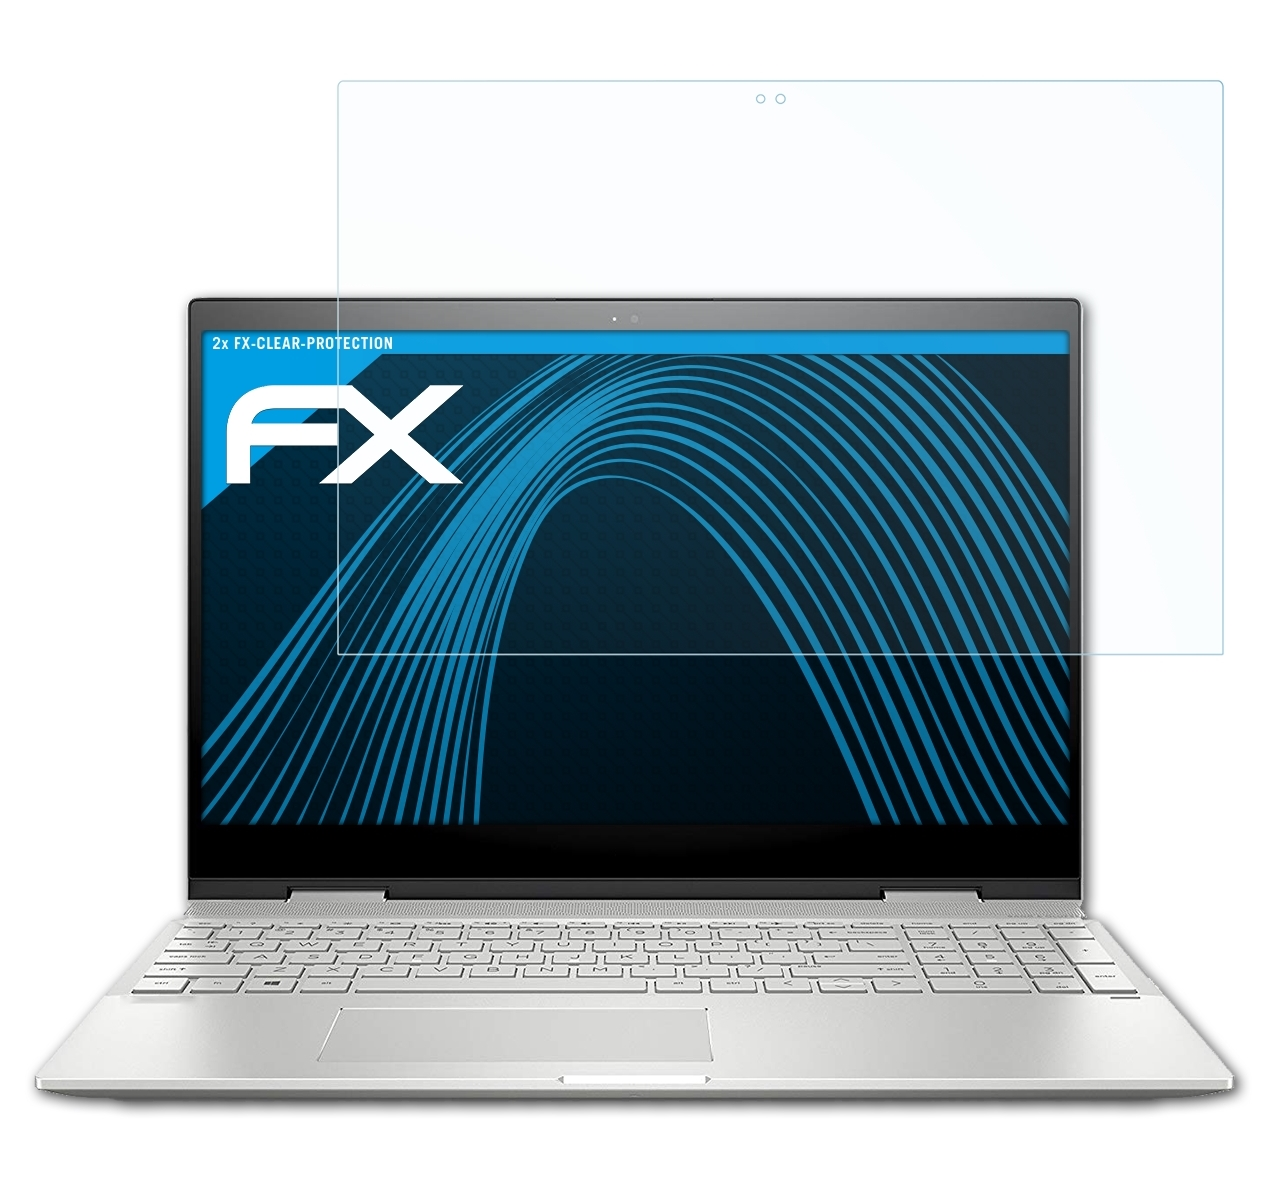 15-cn0008ng) FX-Clear Displayschutz(für x360 Envy 2x ATFOLIX HP